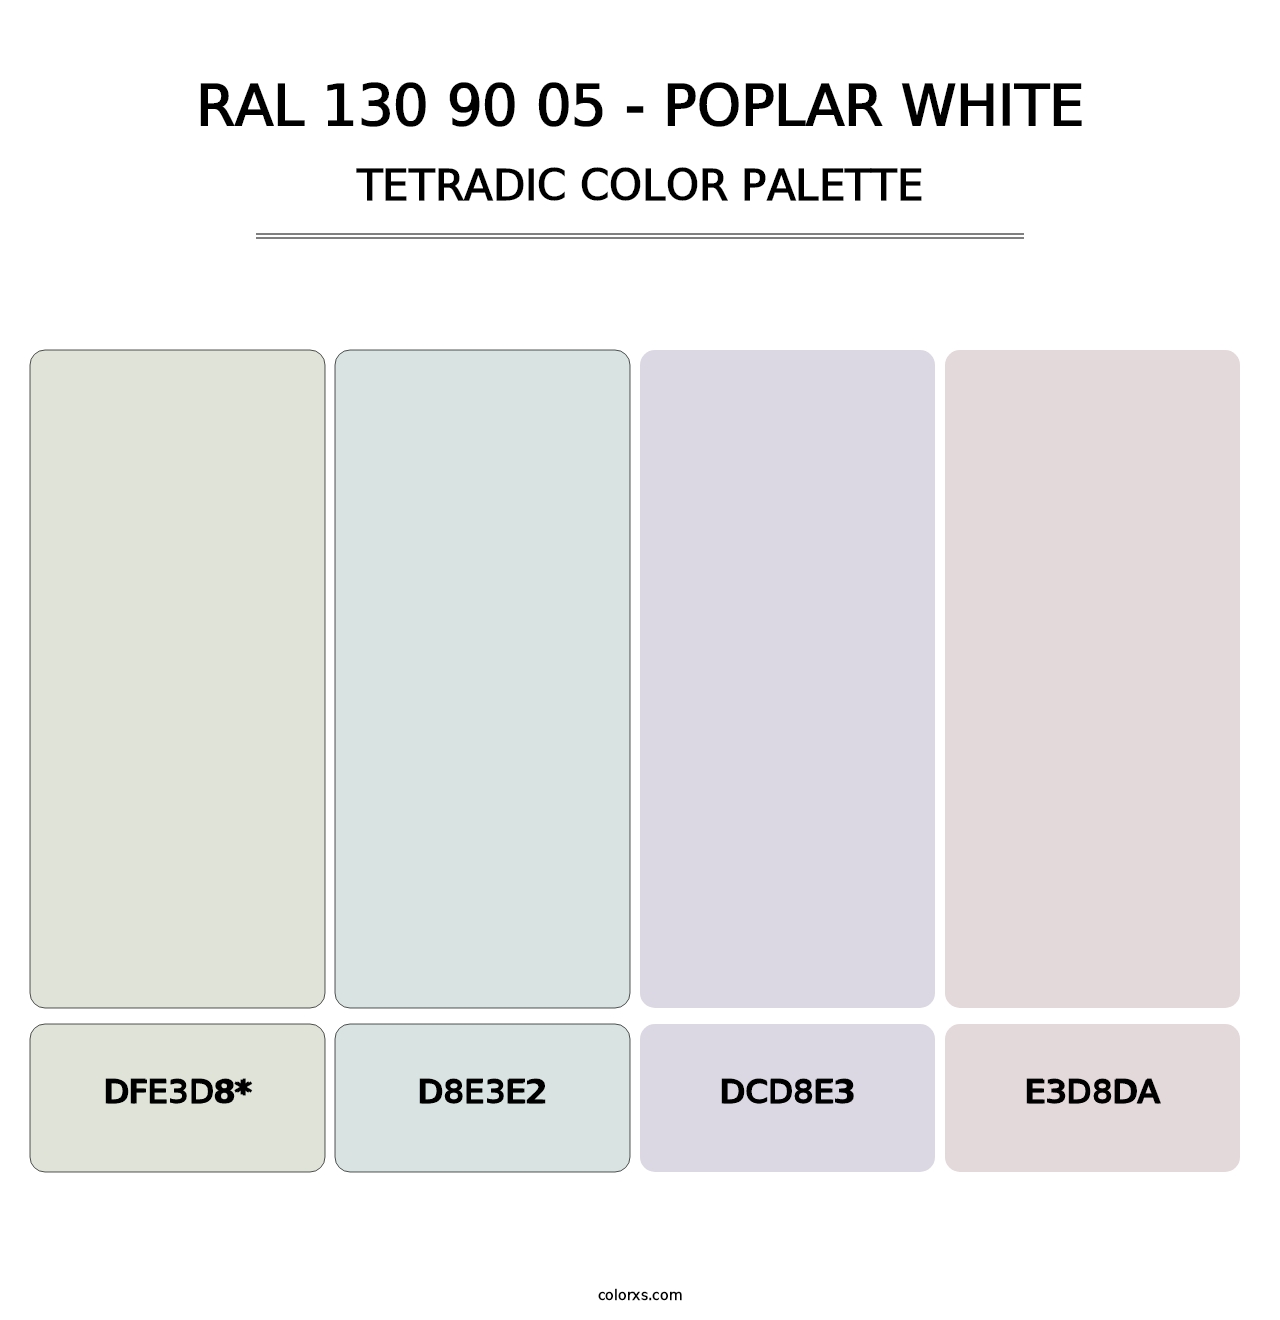 RAL 130 90 05 - Poplar White - Tetradic Color Palette